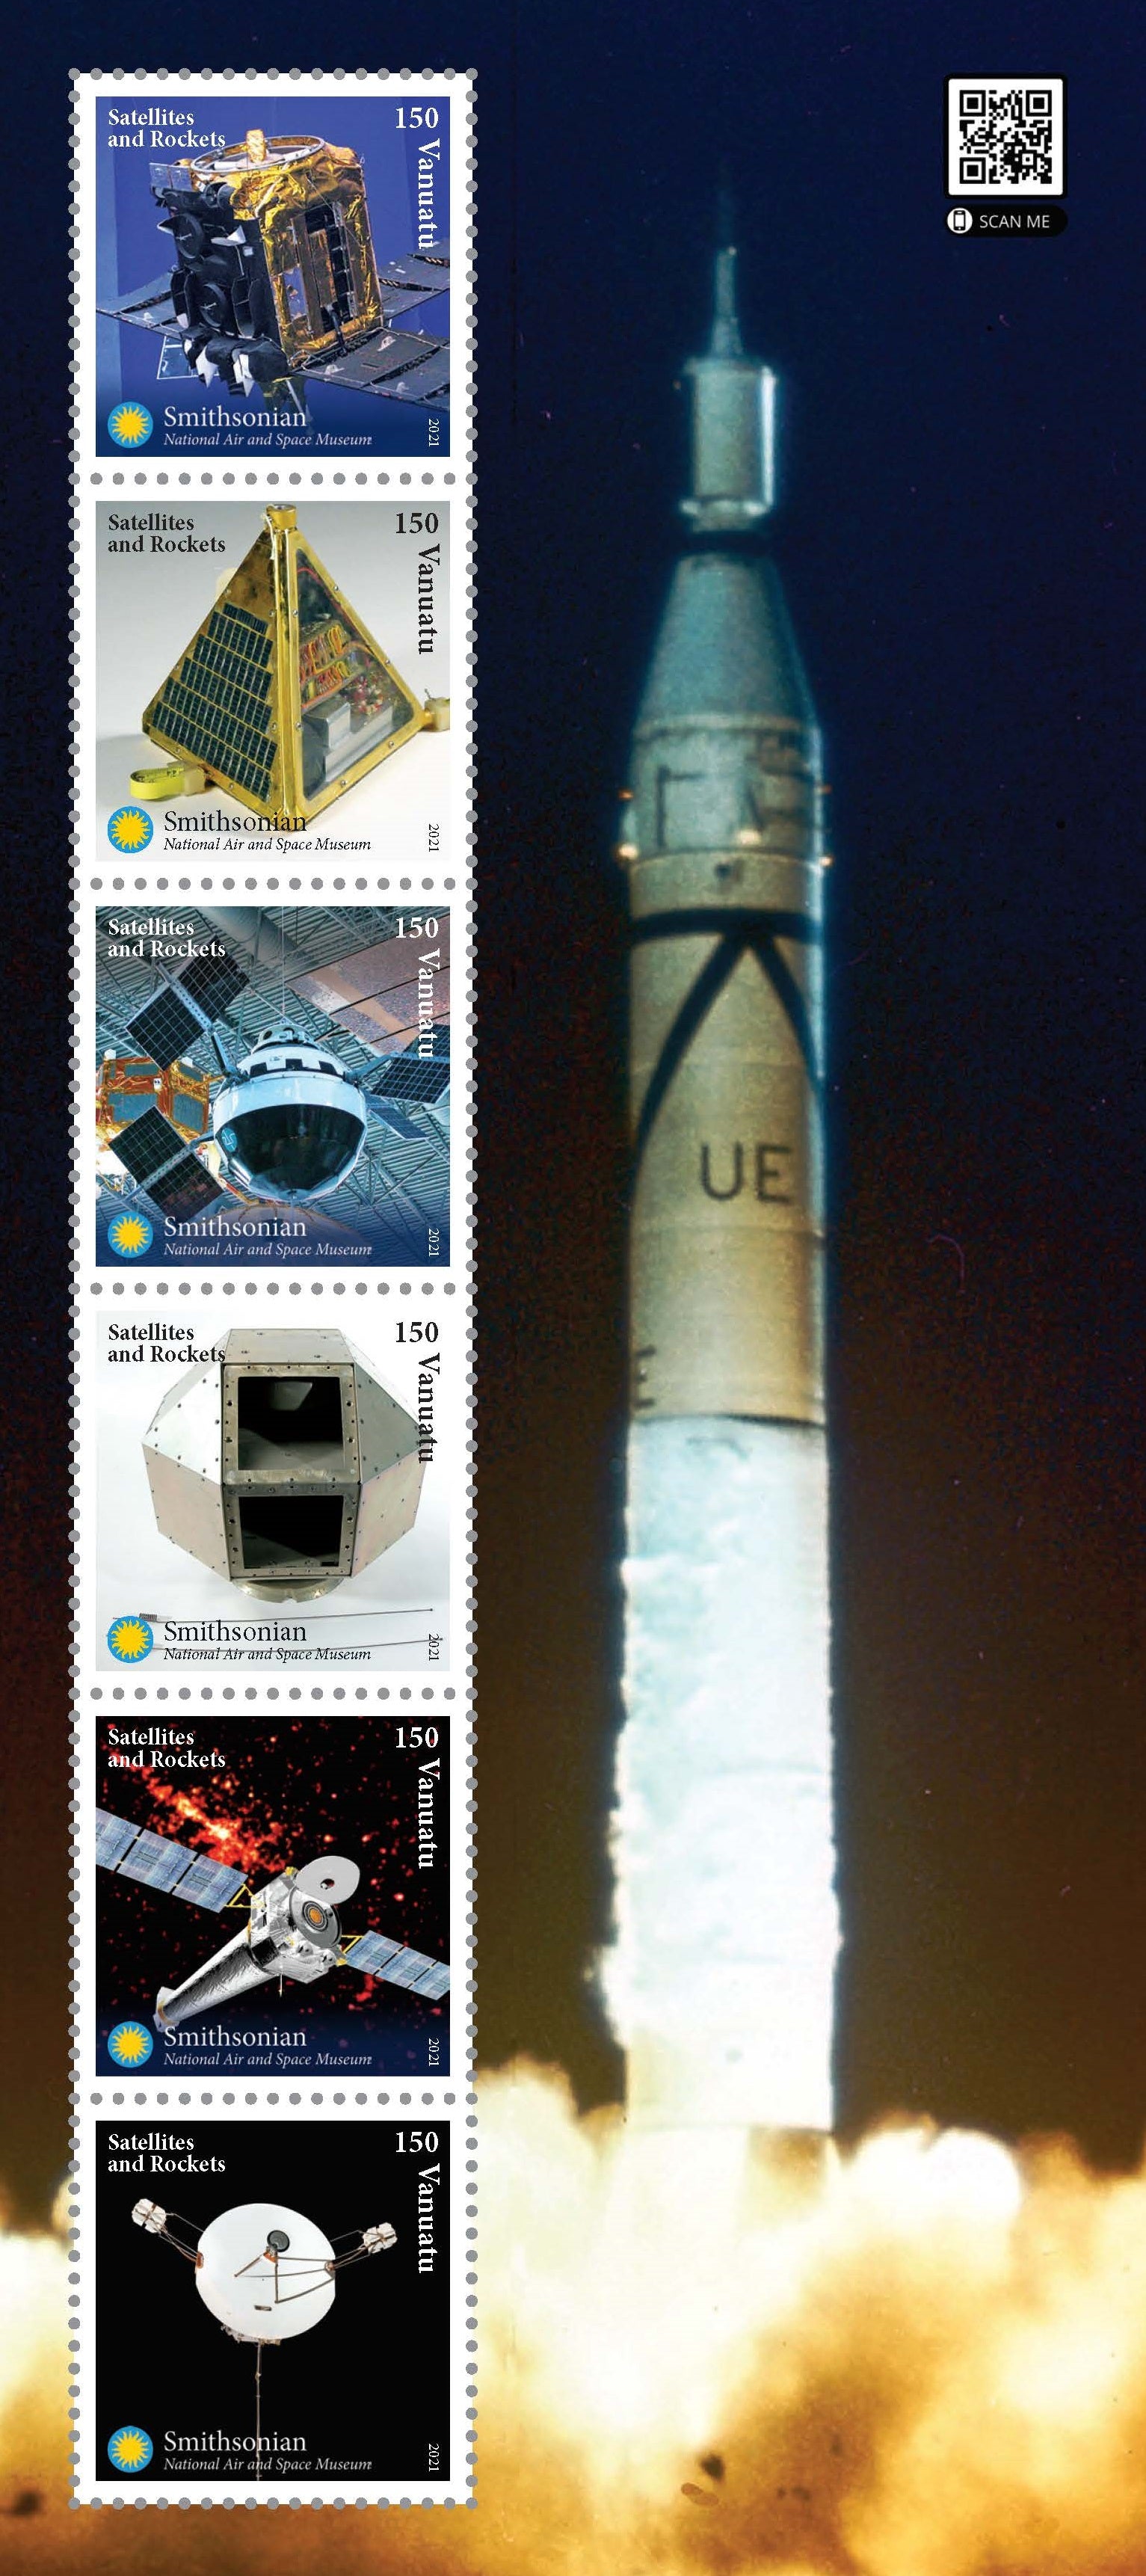 Unit 2 - Satellites and Rockets